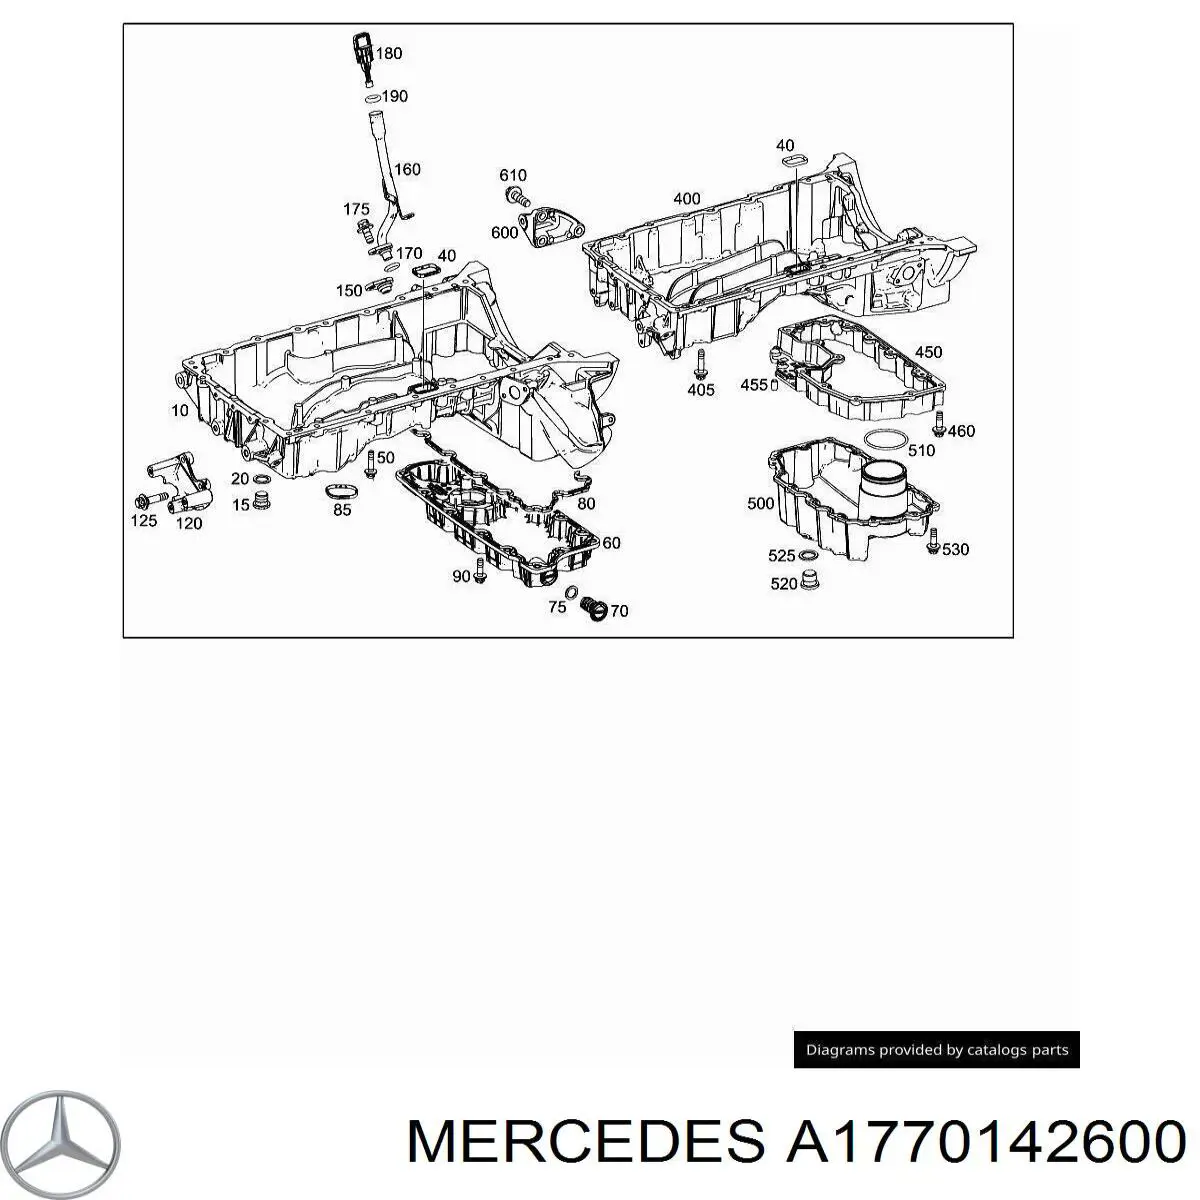 1770142600 Mercedes 